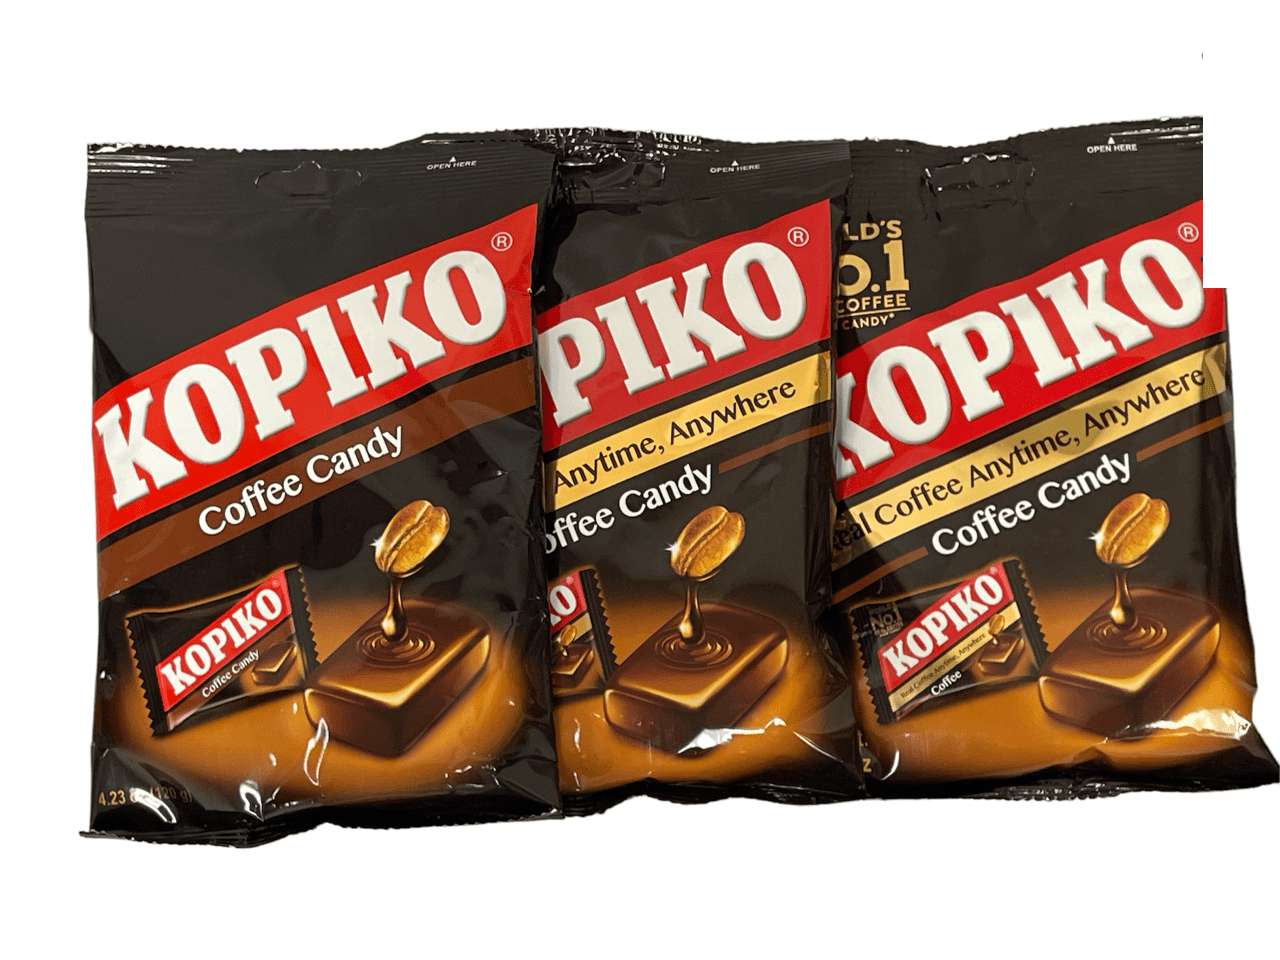 Kopiko Coffee Candy  Wholesale Unlimited Inc.